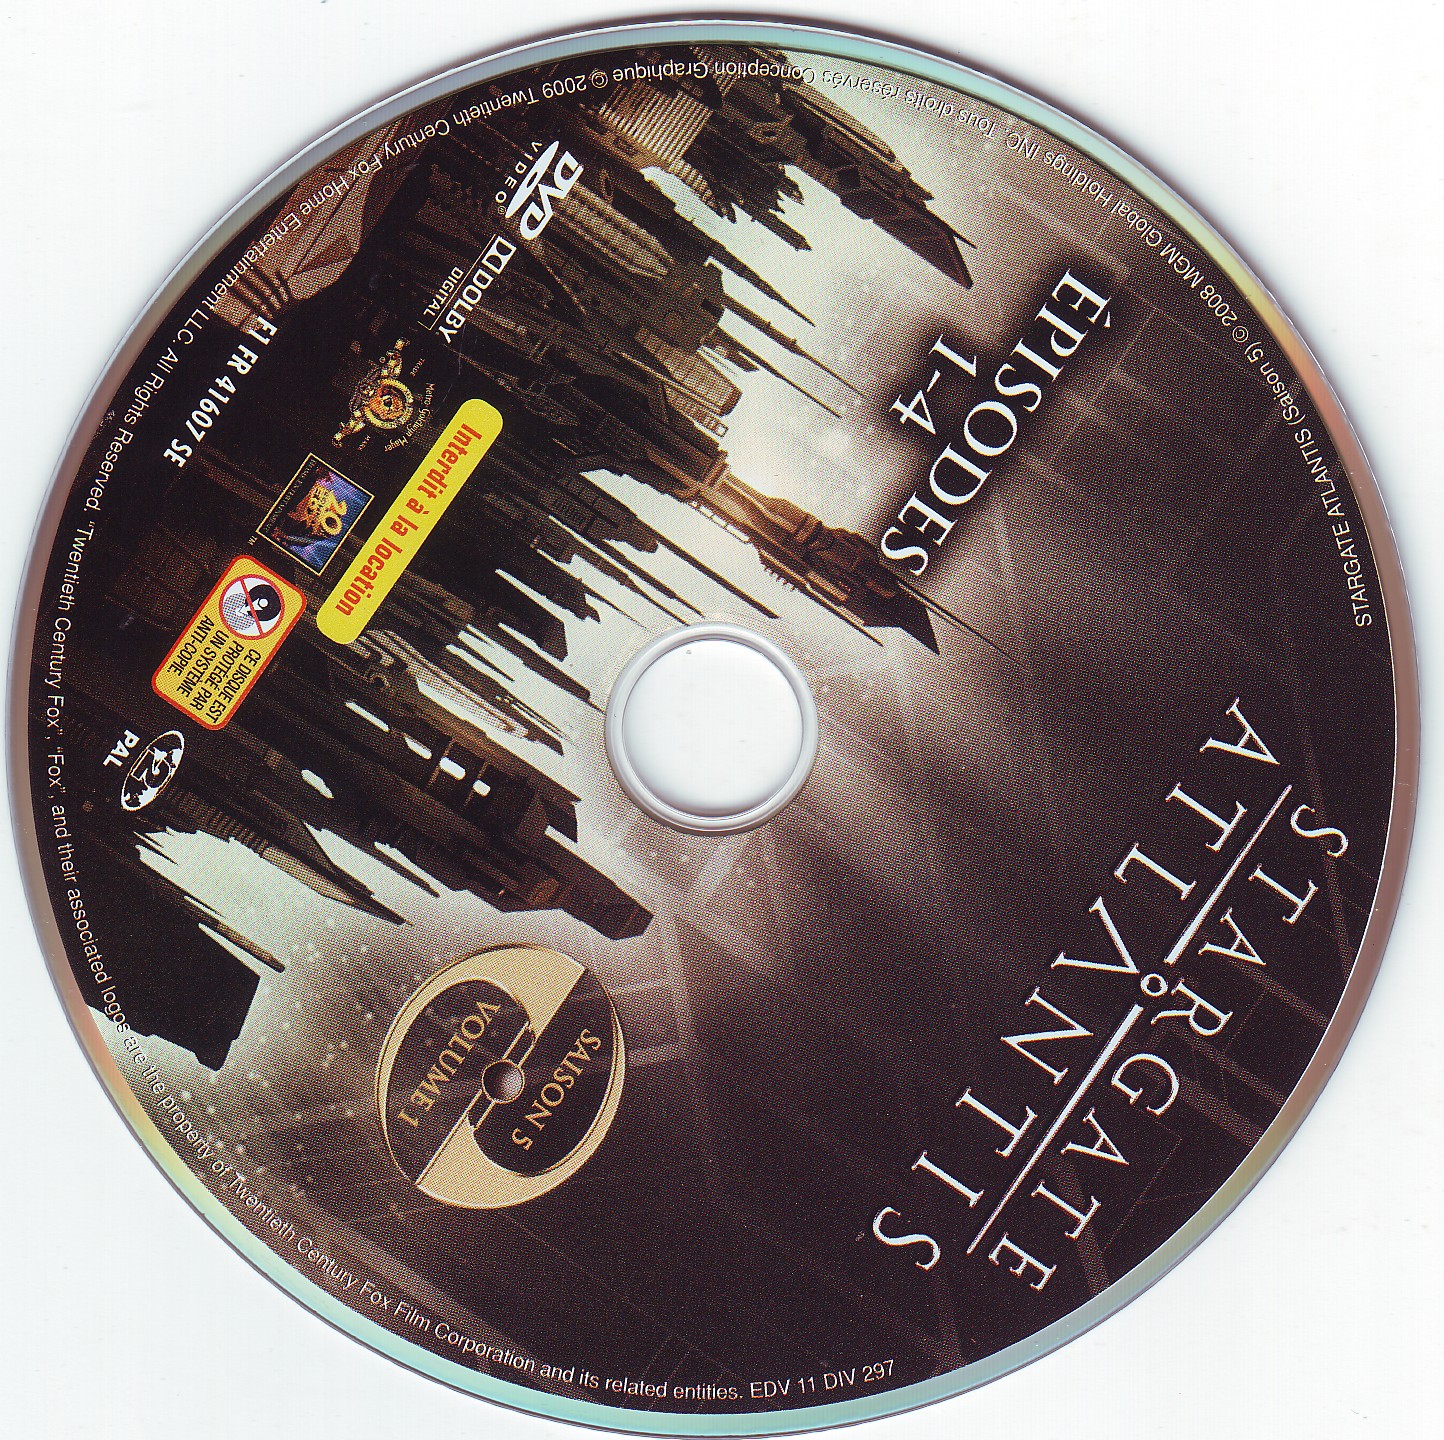 Stargate Atlantis saison 5 DISC 1